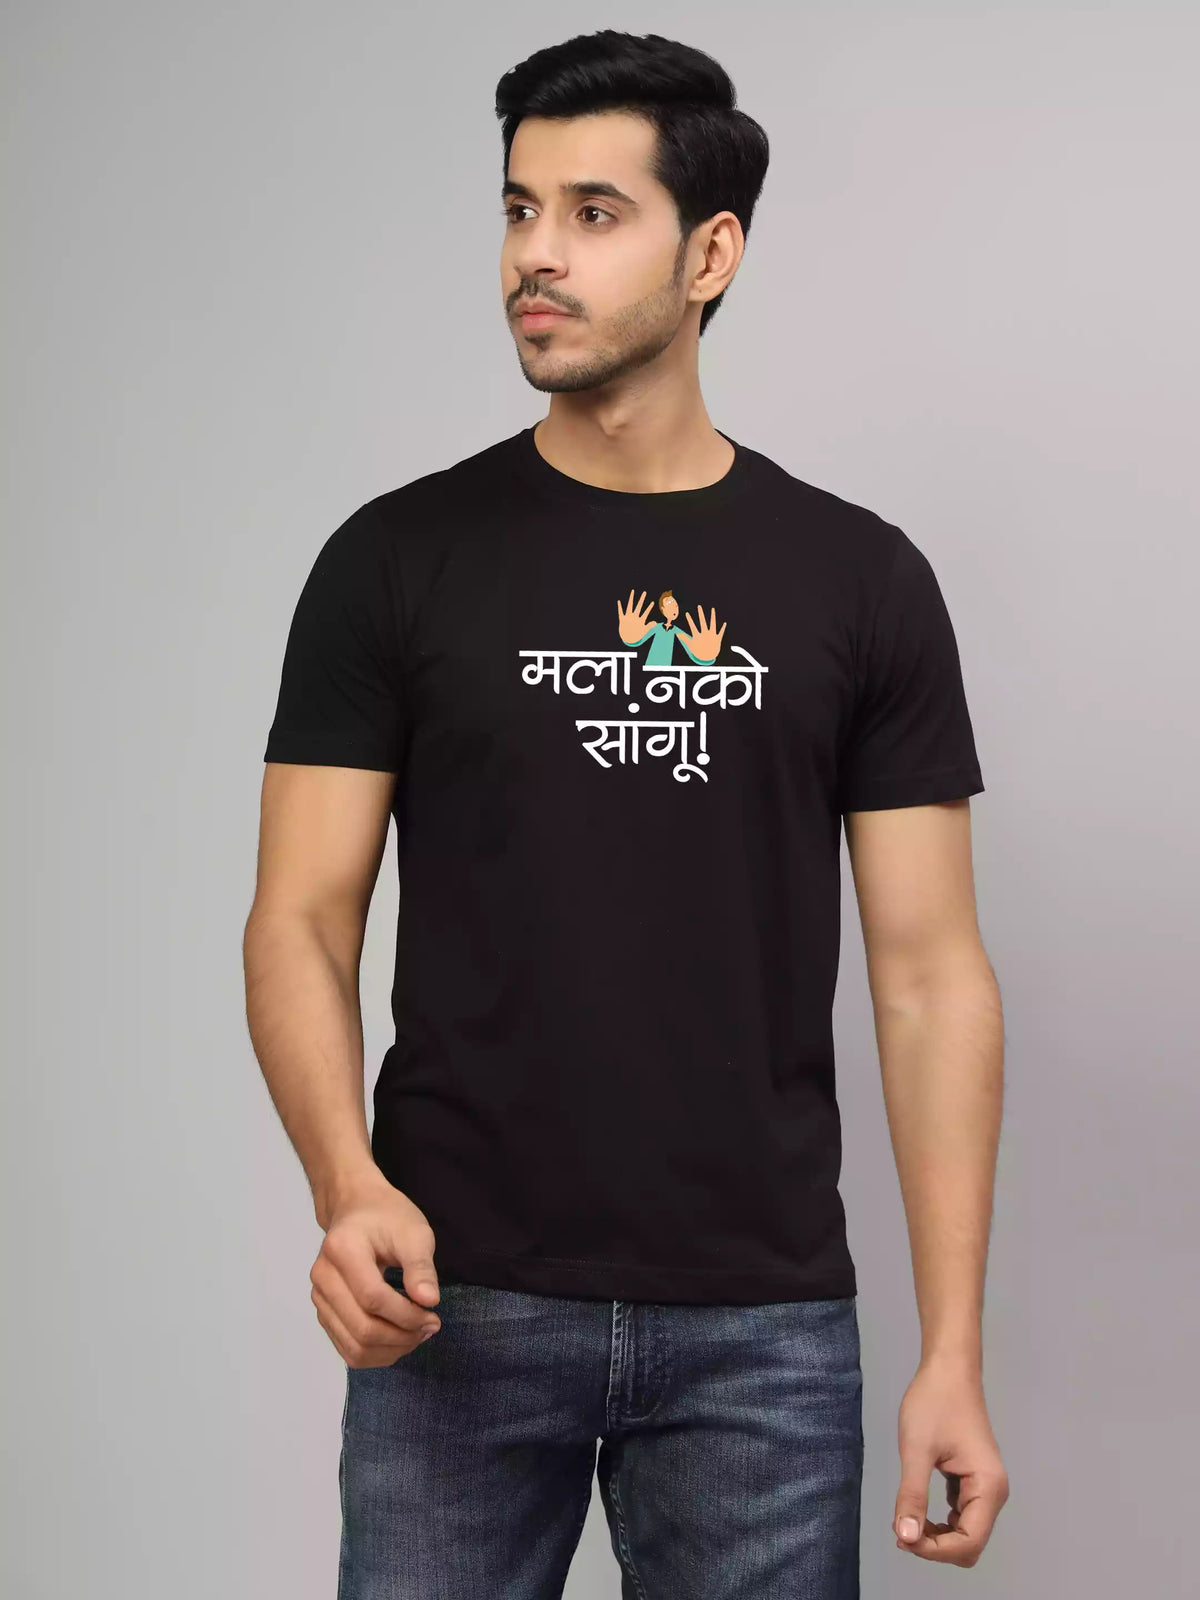 Mala nako sangu - Sukhiaatma Unisex Marathi Graphic Printed Black T-shirt